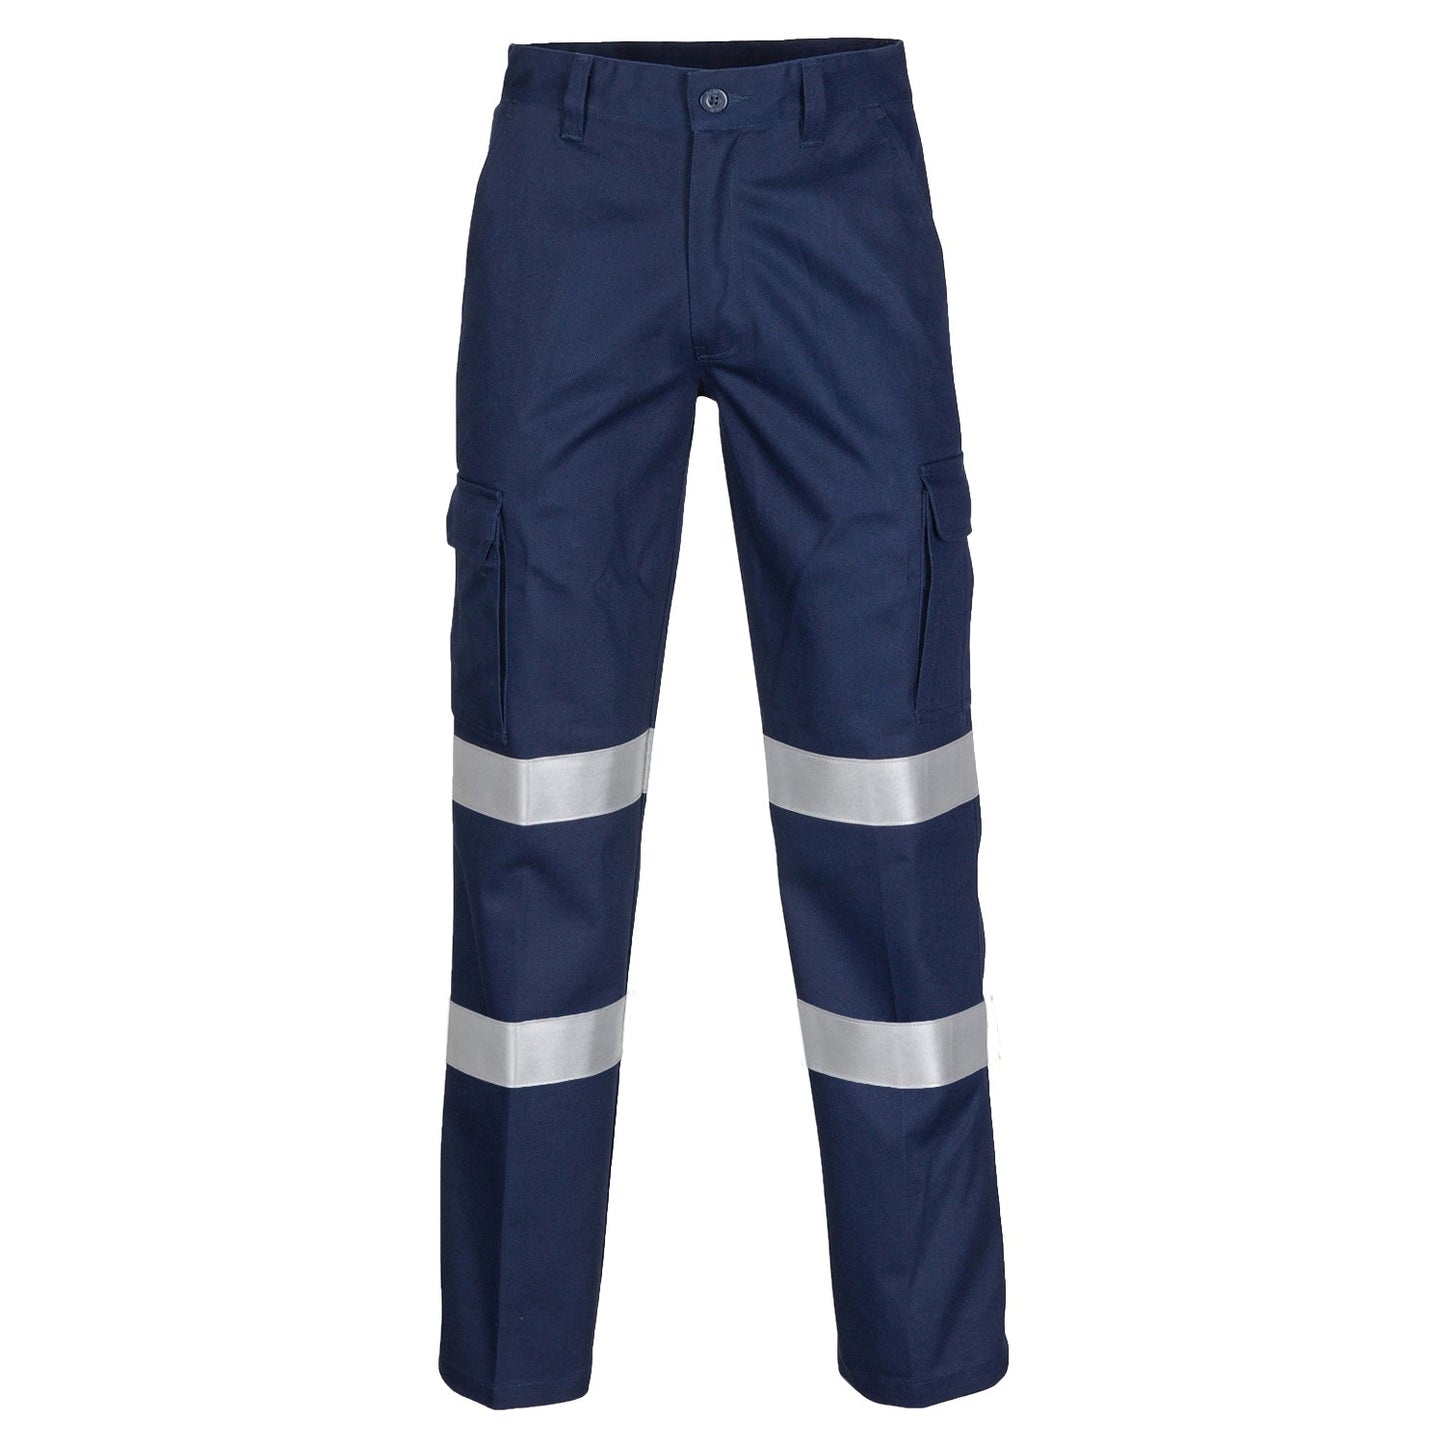 Patron Saint Fr Cargo Pants With Bio-motion Fr Tape - 3420 Work Wear DNC Workwear Navy 72R 